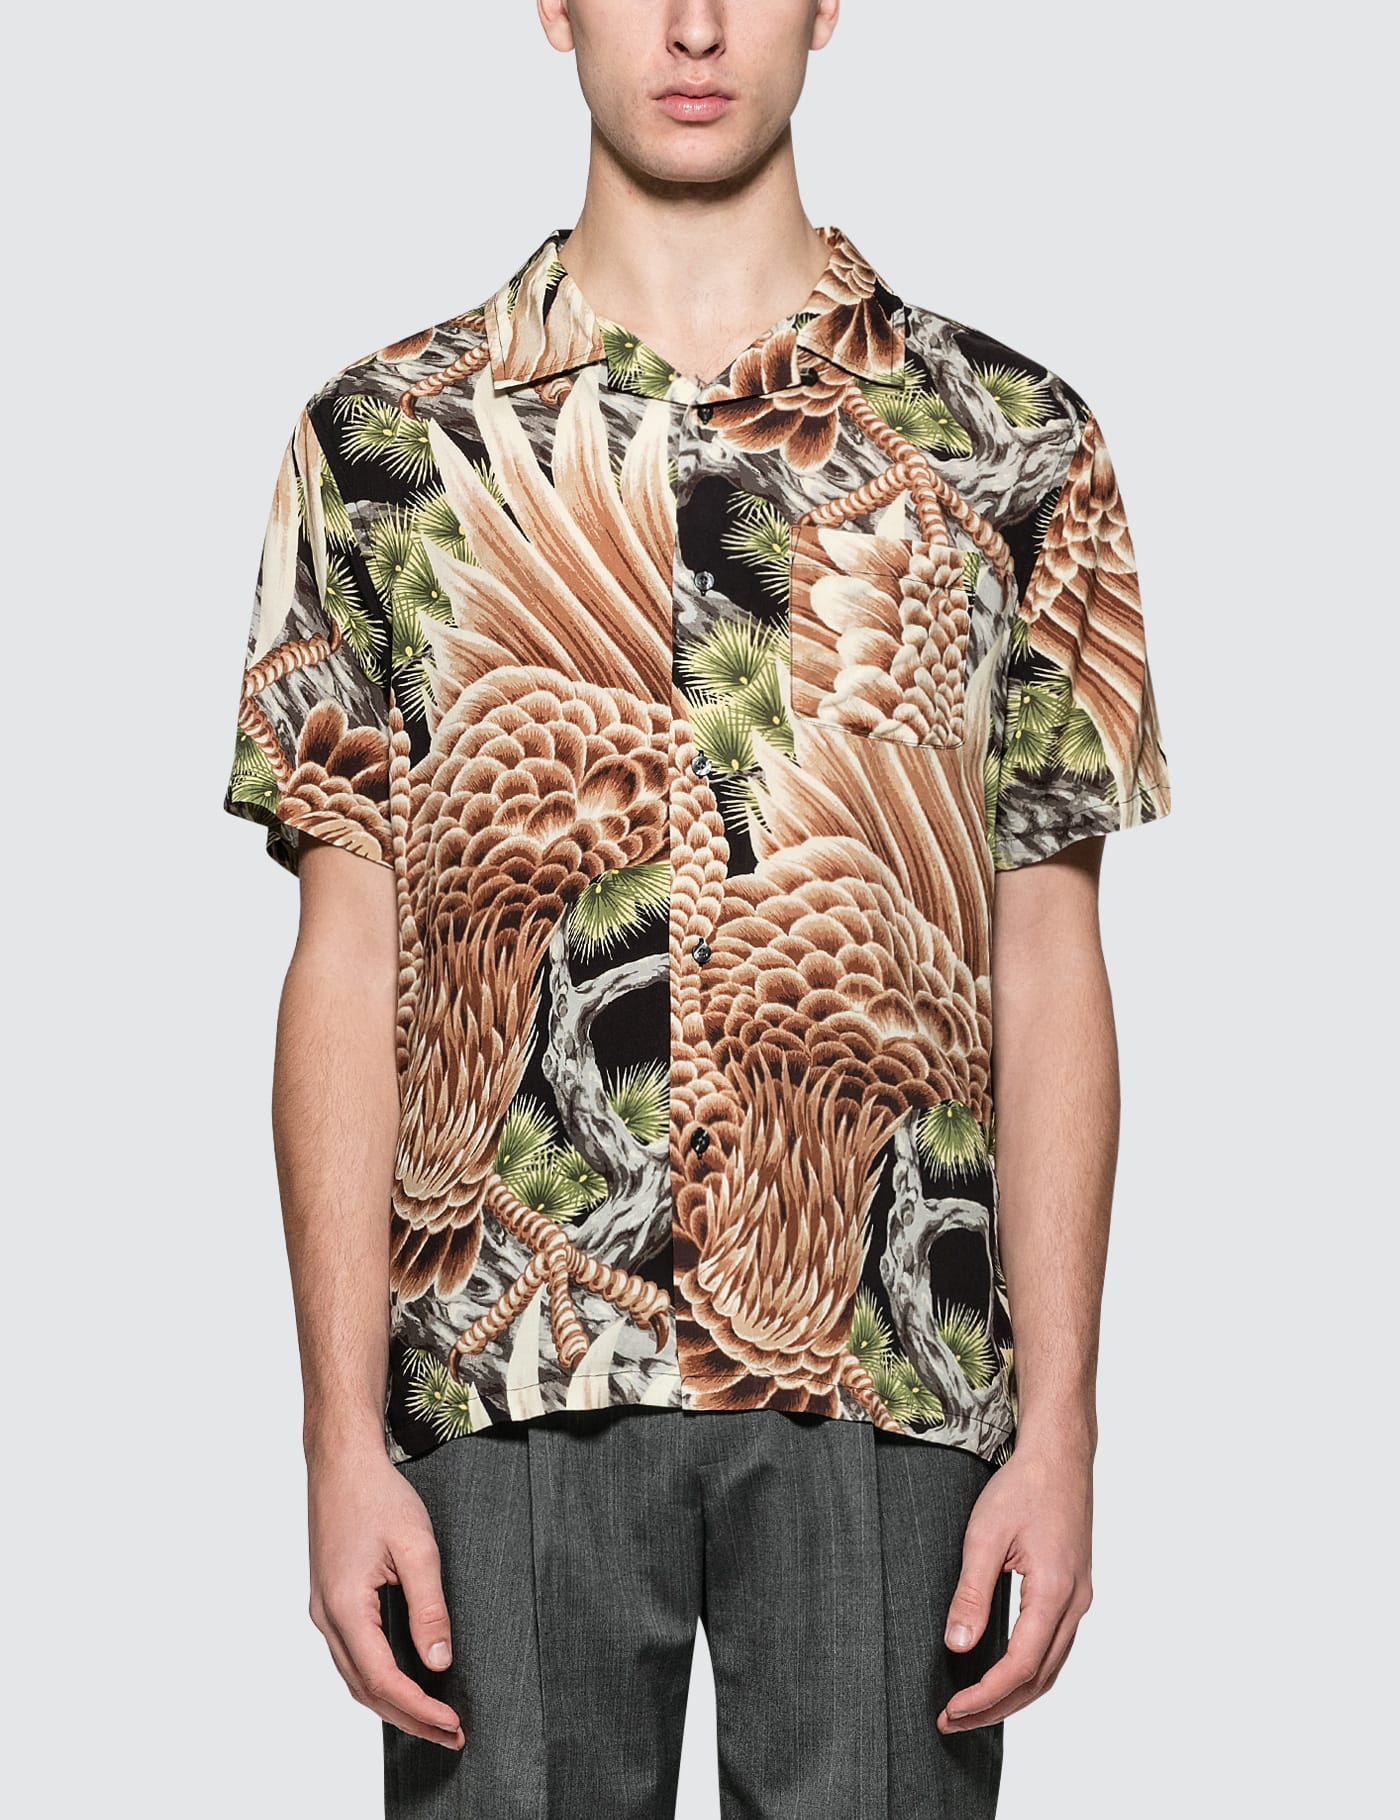 Stüssy - Big Falcon Shirt | HBX - Globally Curated Fashion and